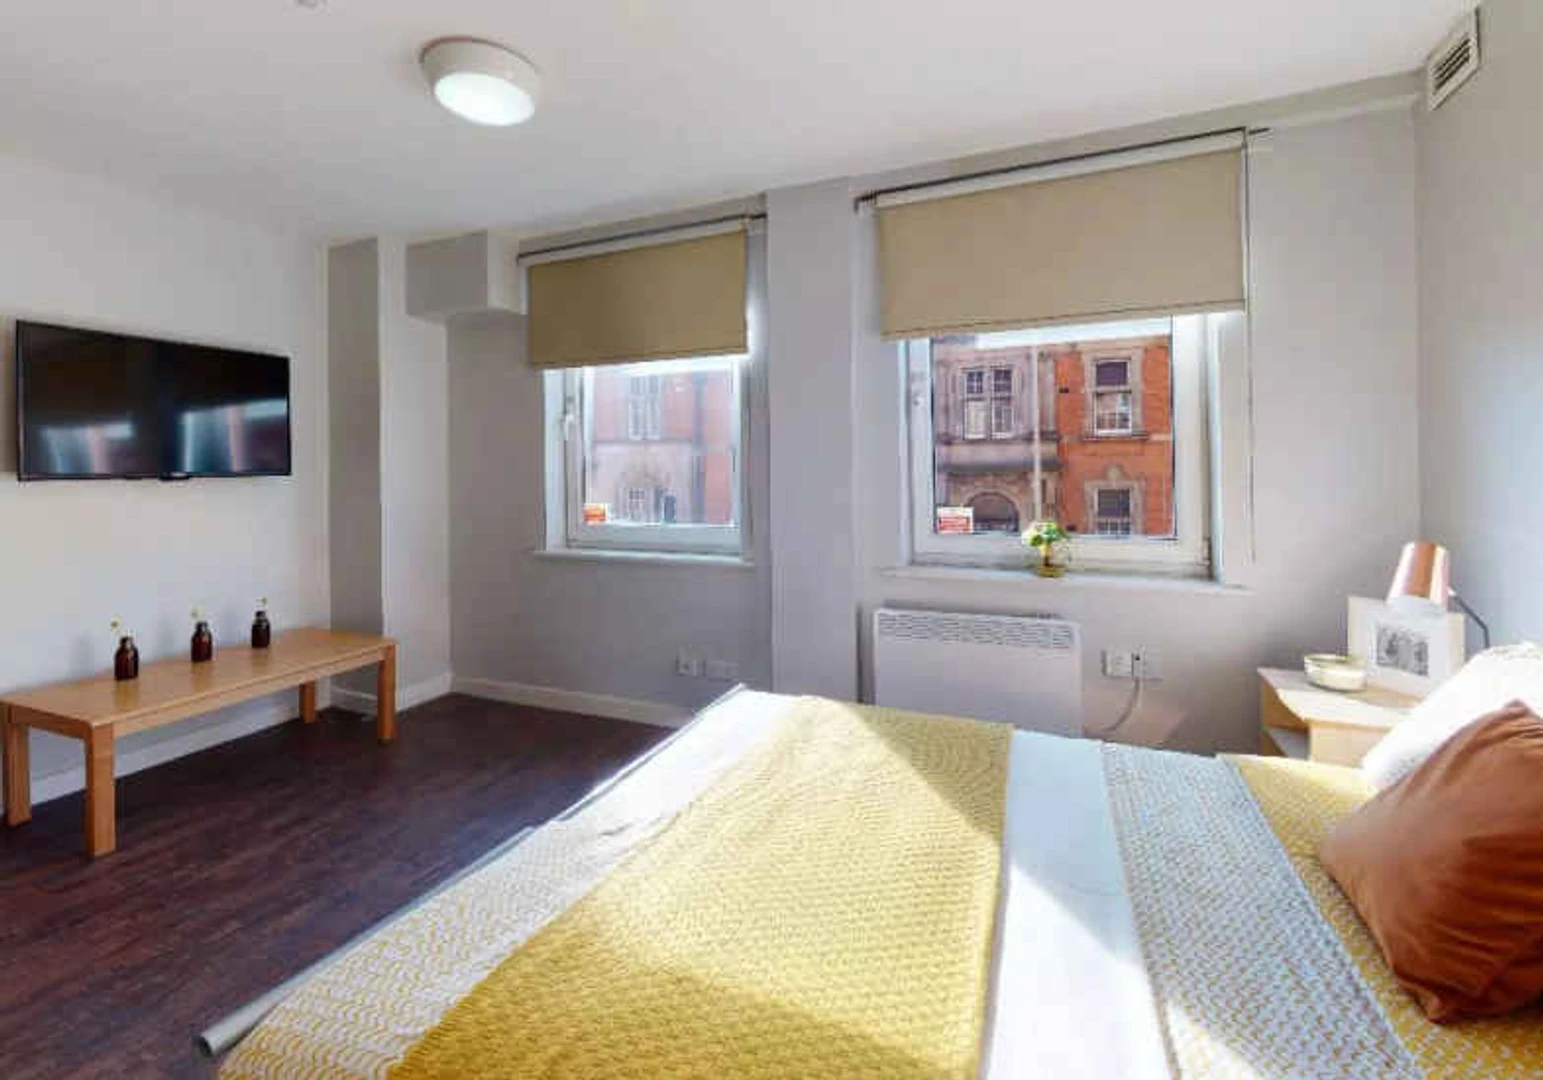 Alquiler de habitación en piso compartido en Leicester